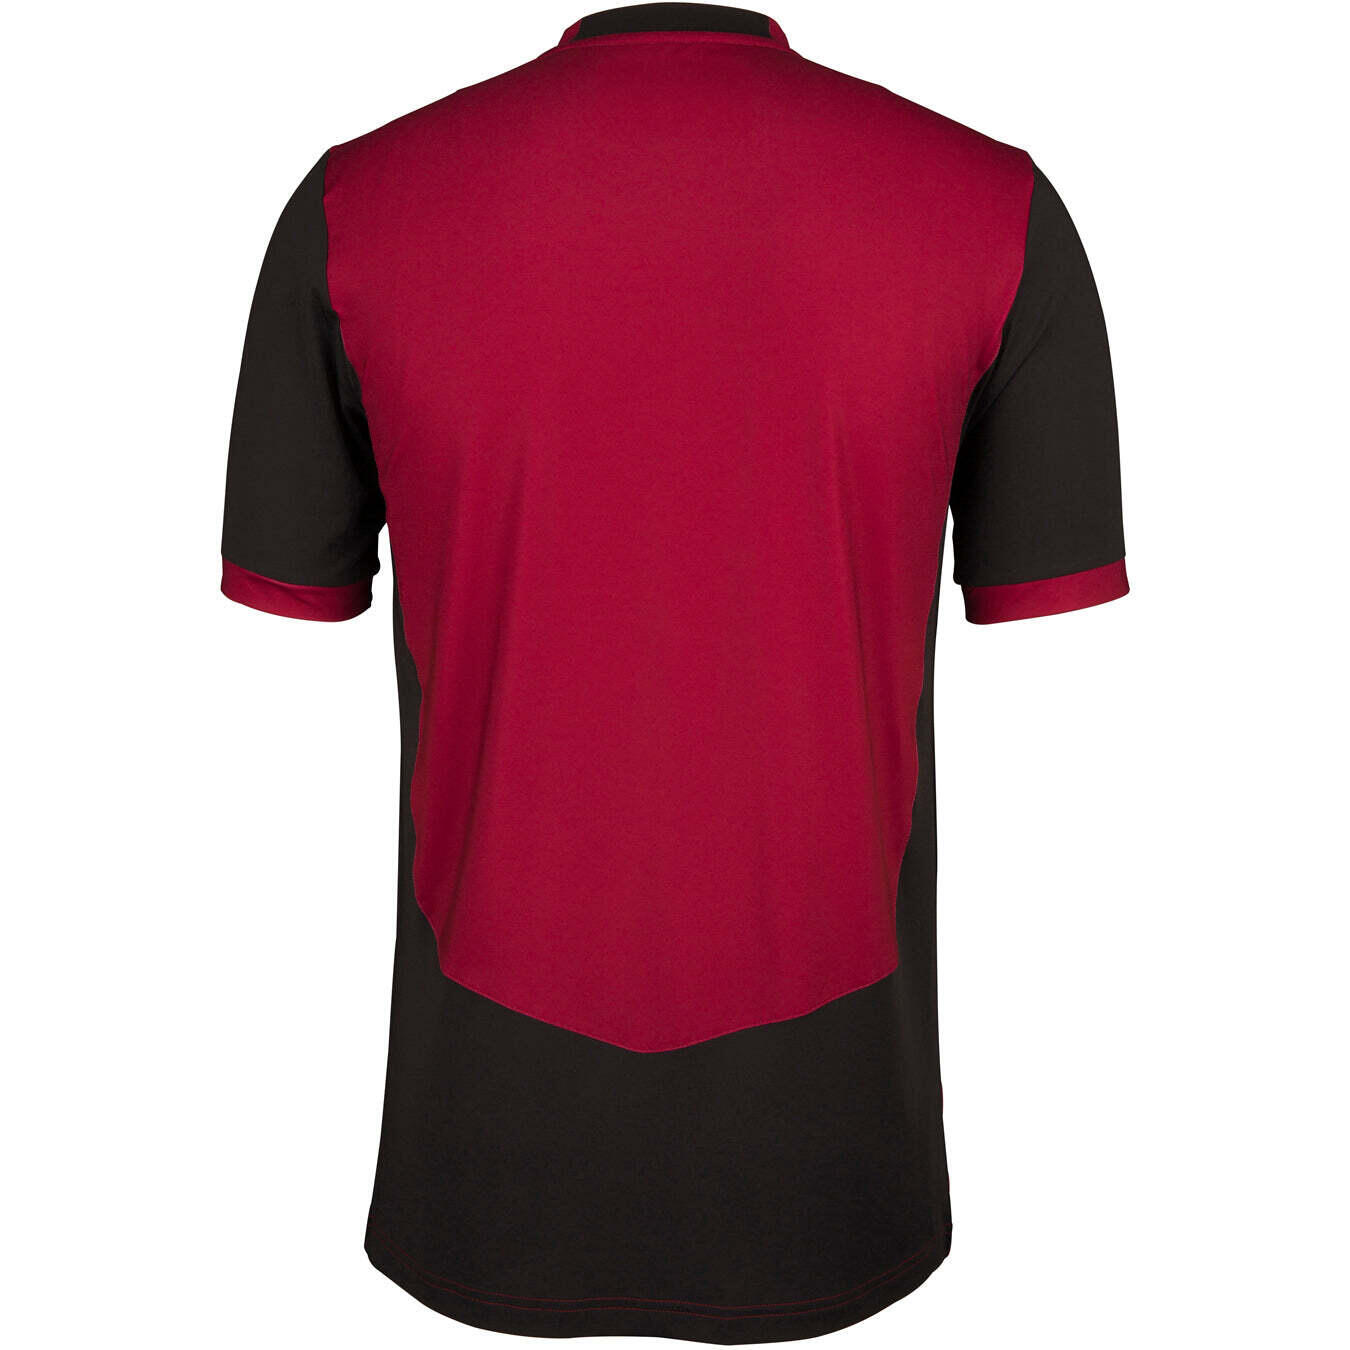 Pro Performance T20 Short Sleeve Shirt, Maroon / Black, Adult 2/3